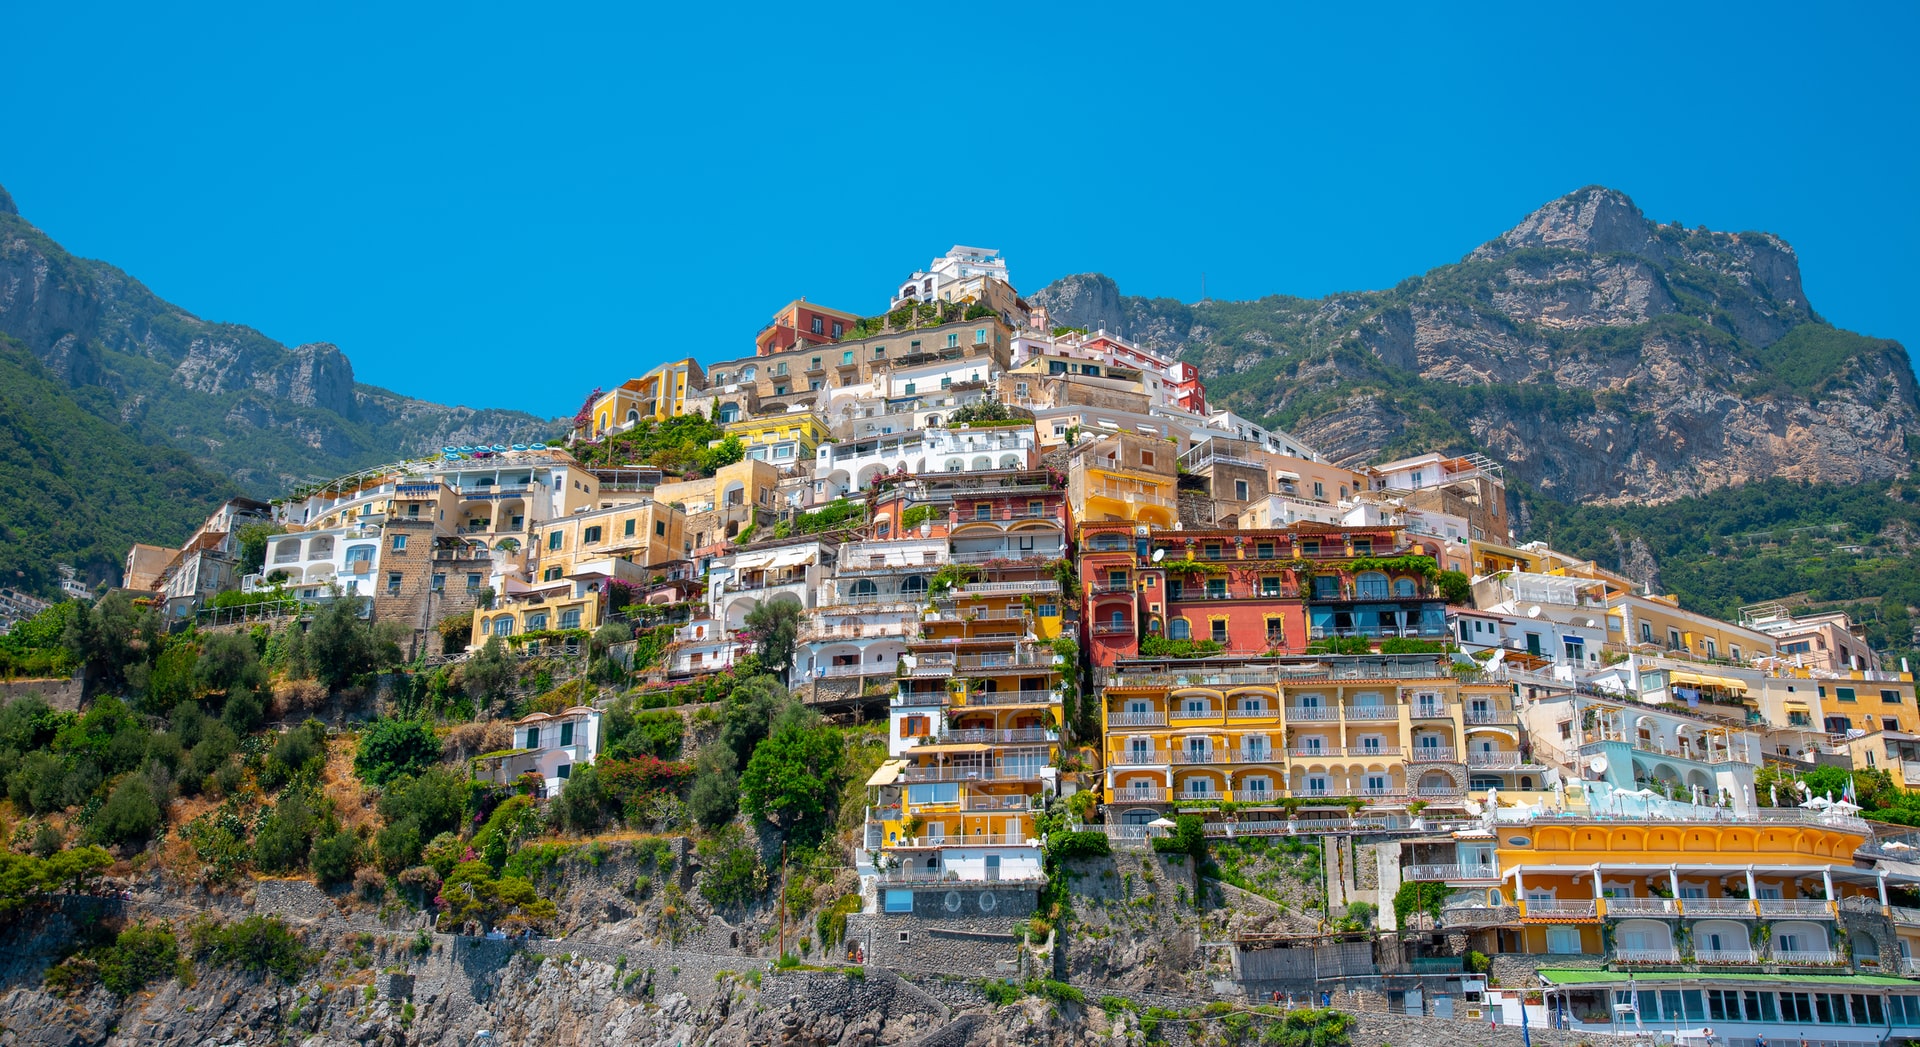 Live the "Dolce Vita" in Amalfi!